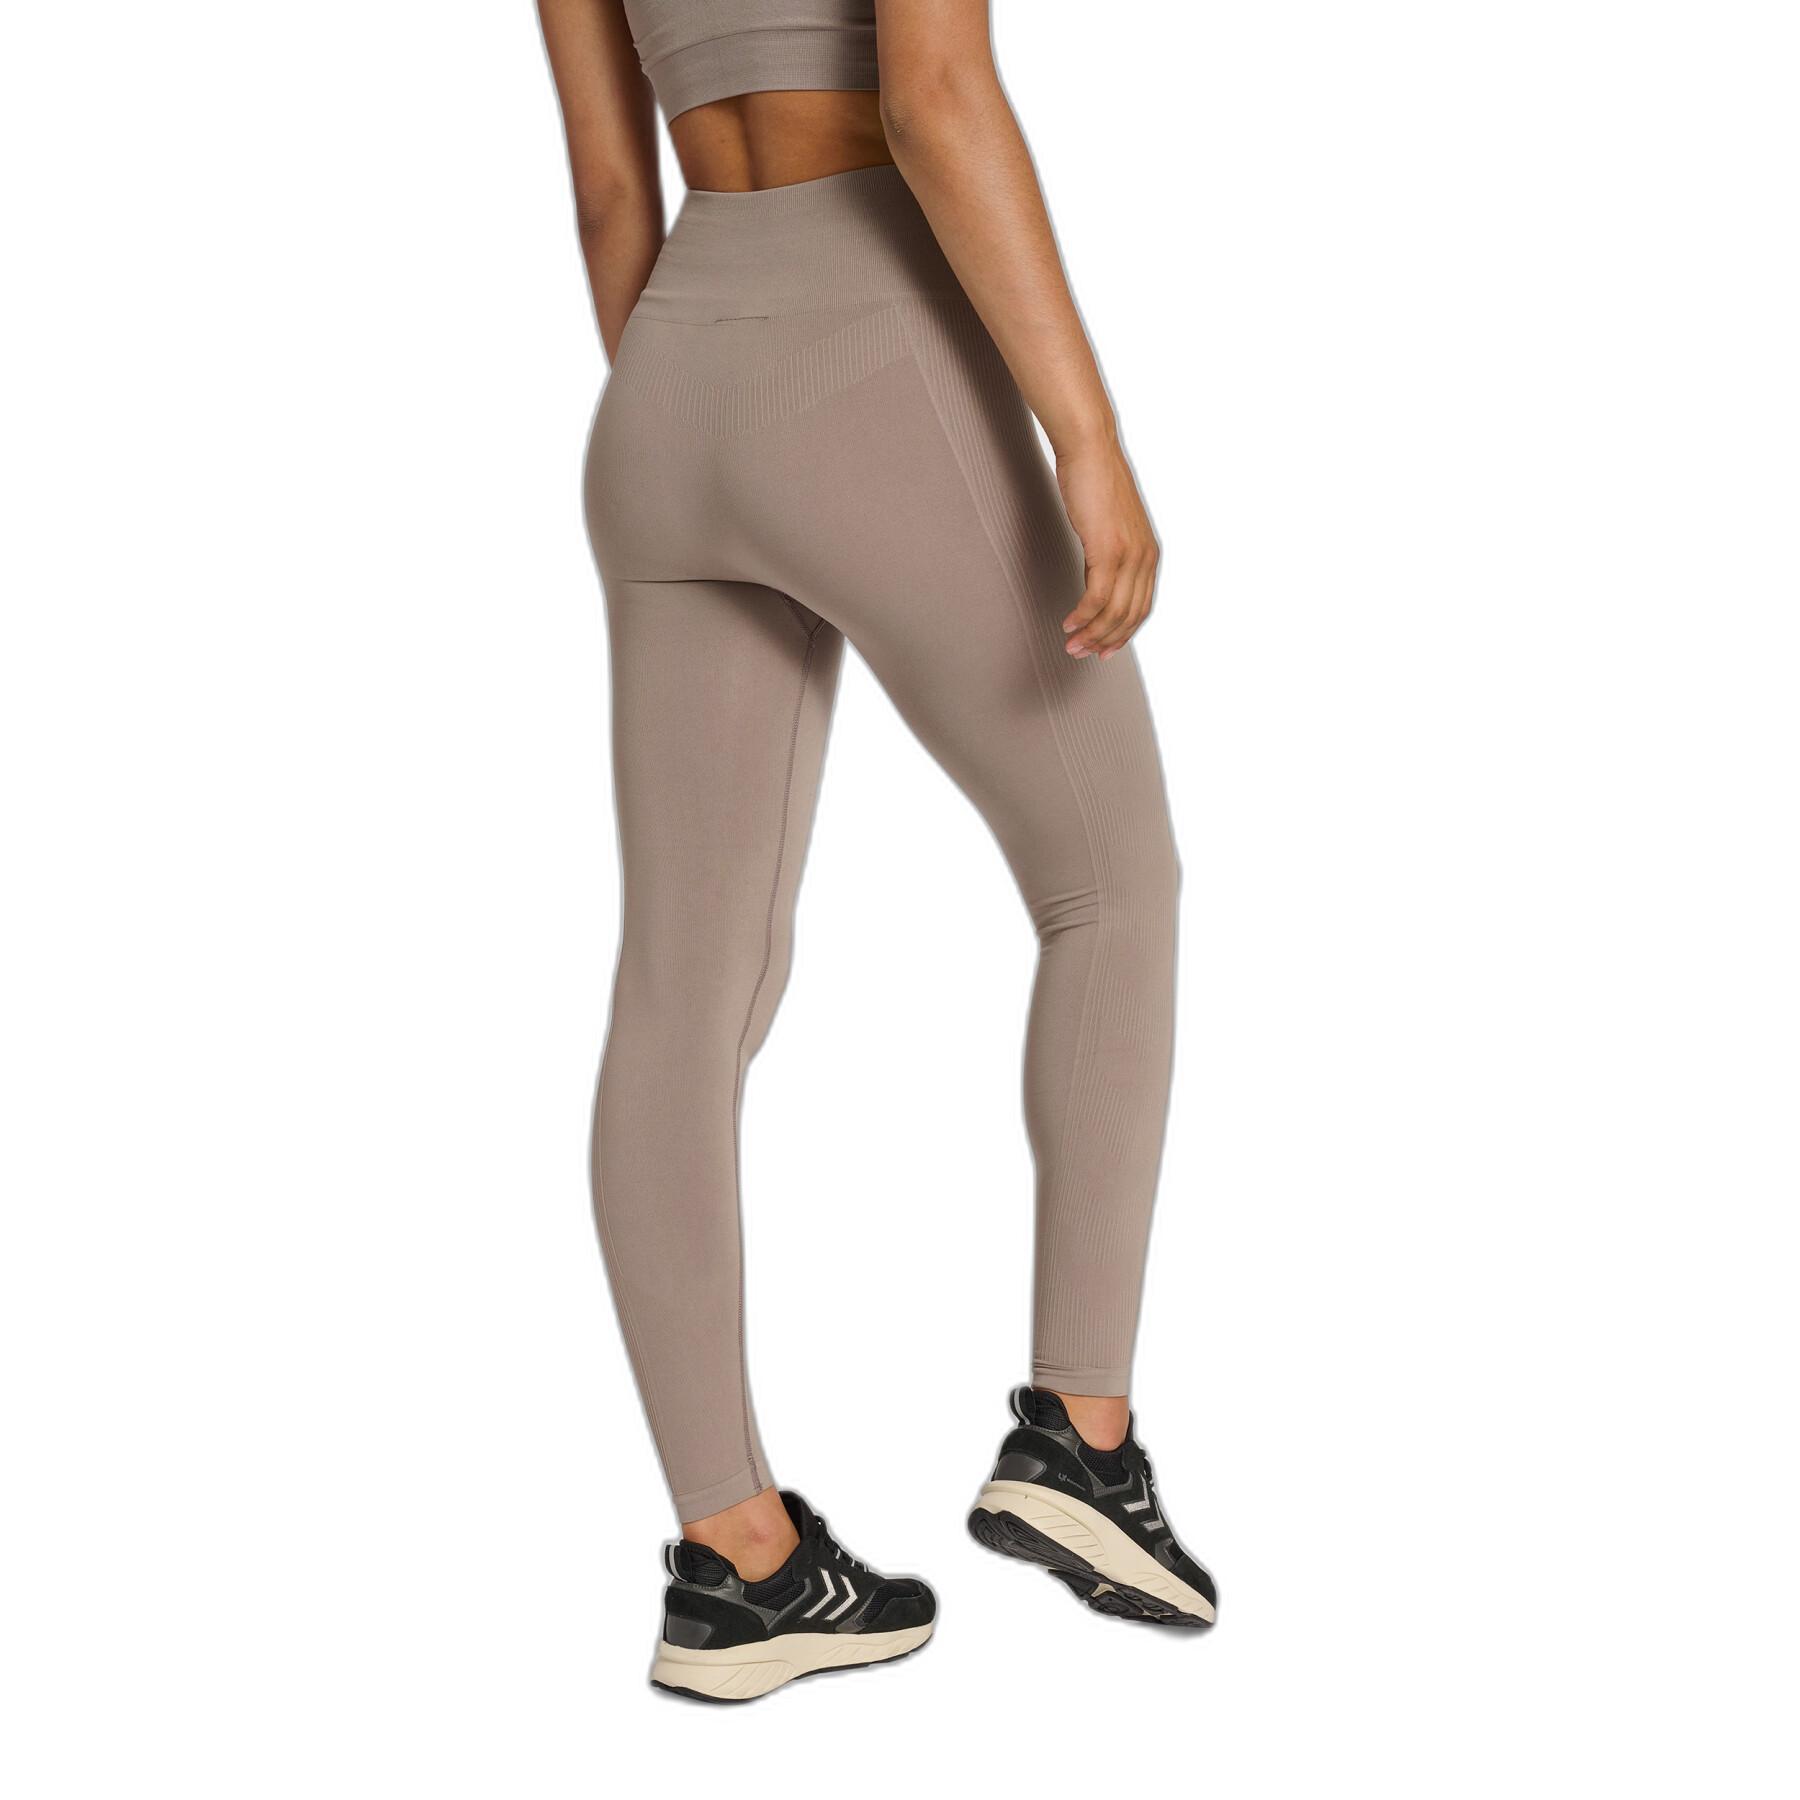 Lifestyle - Legging top woman Hummel TIF - Brands - open-back